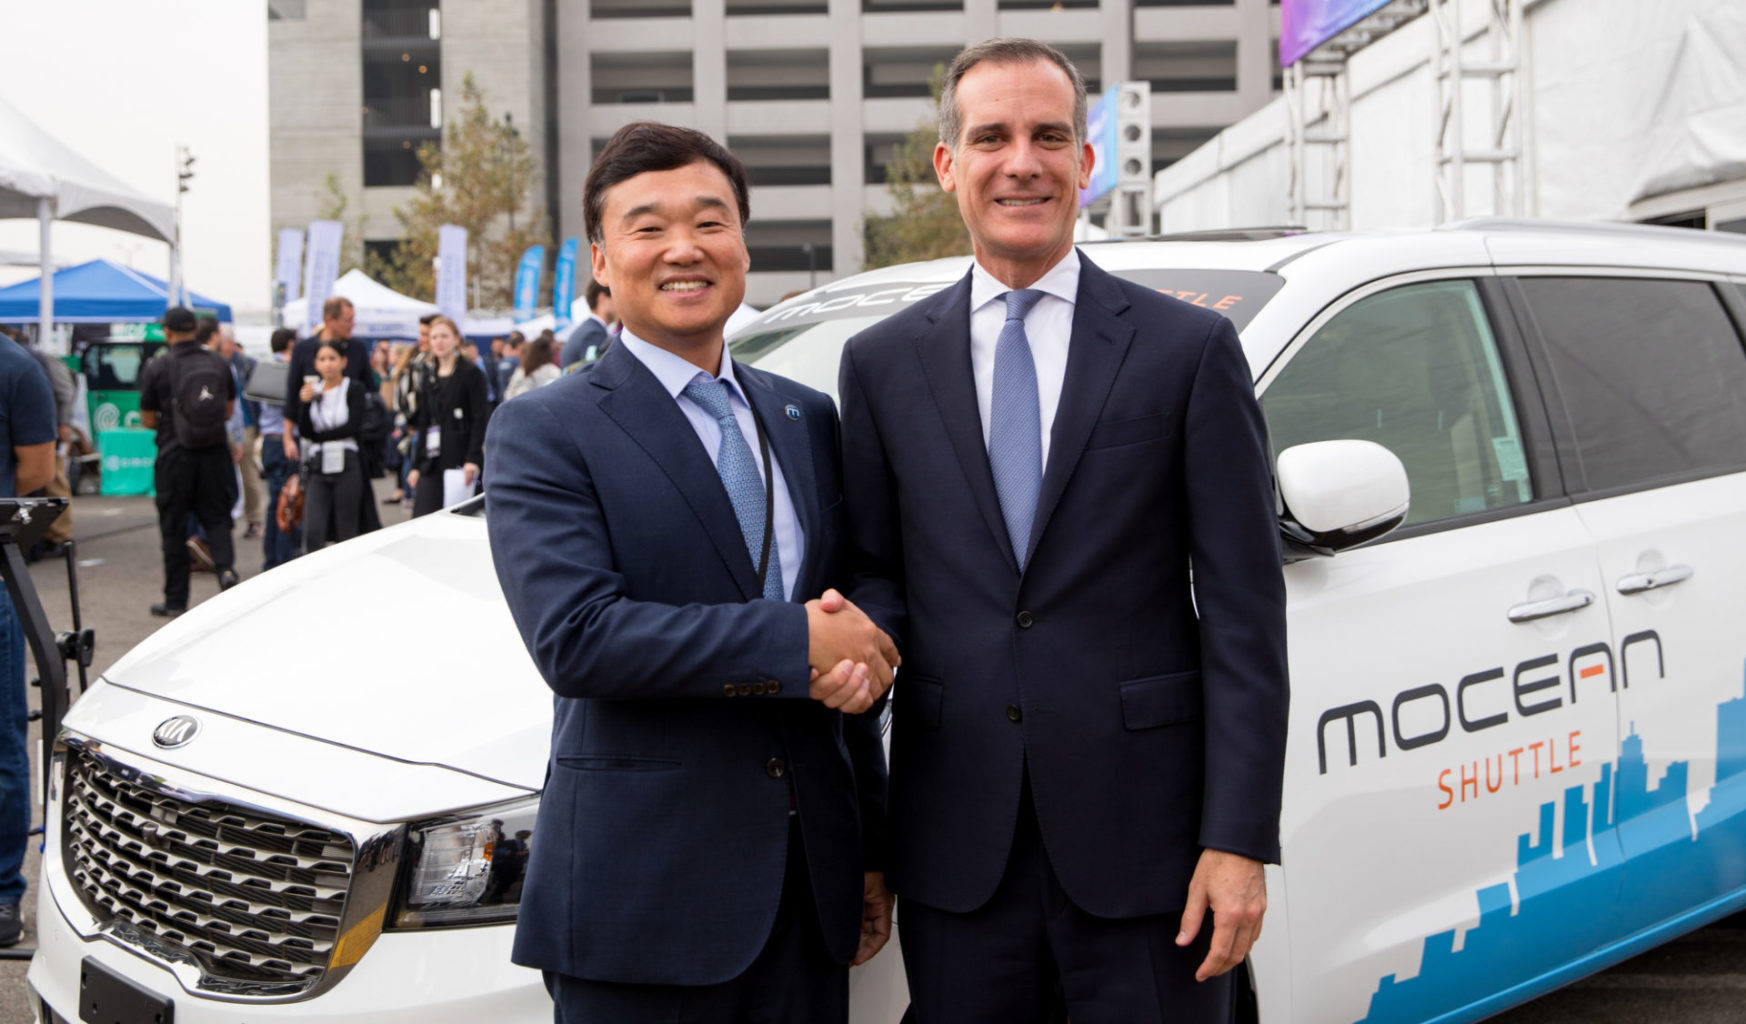 Hyundai's MoceanLab mobility venture